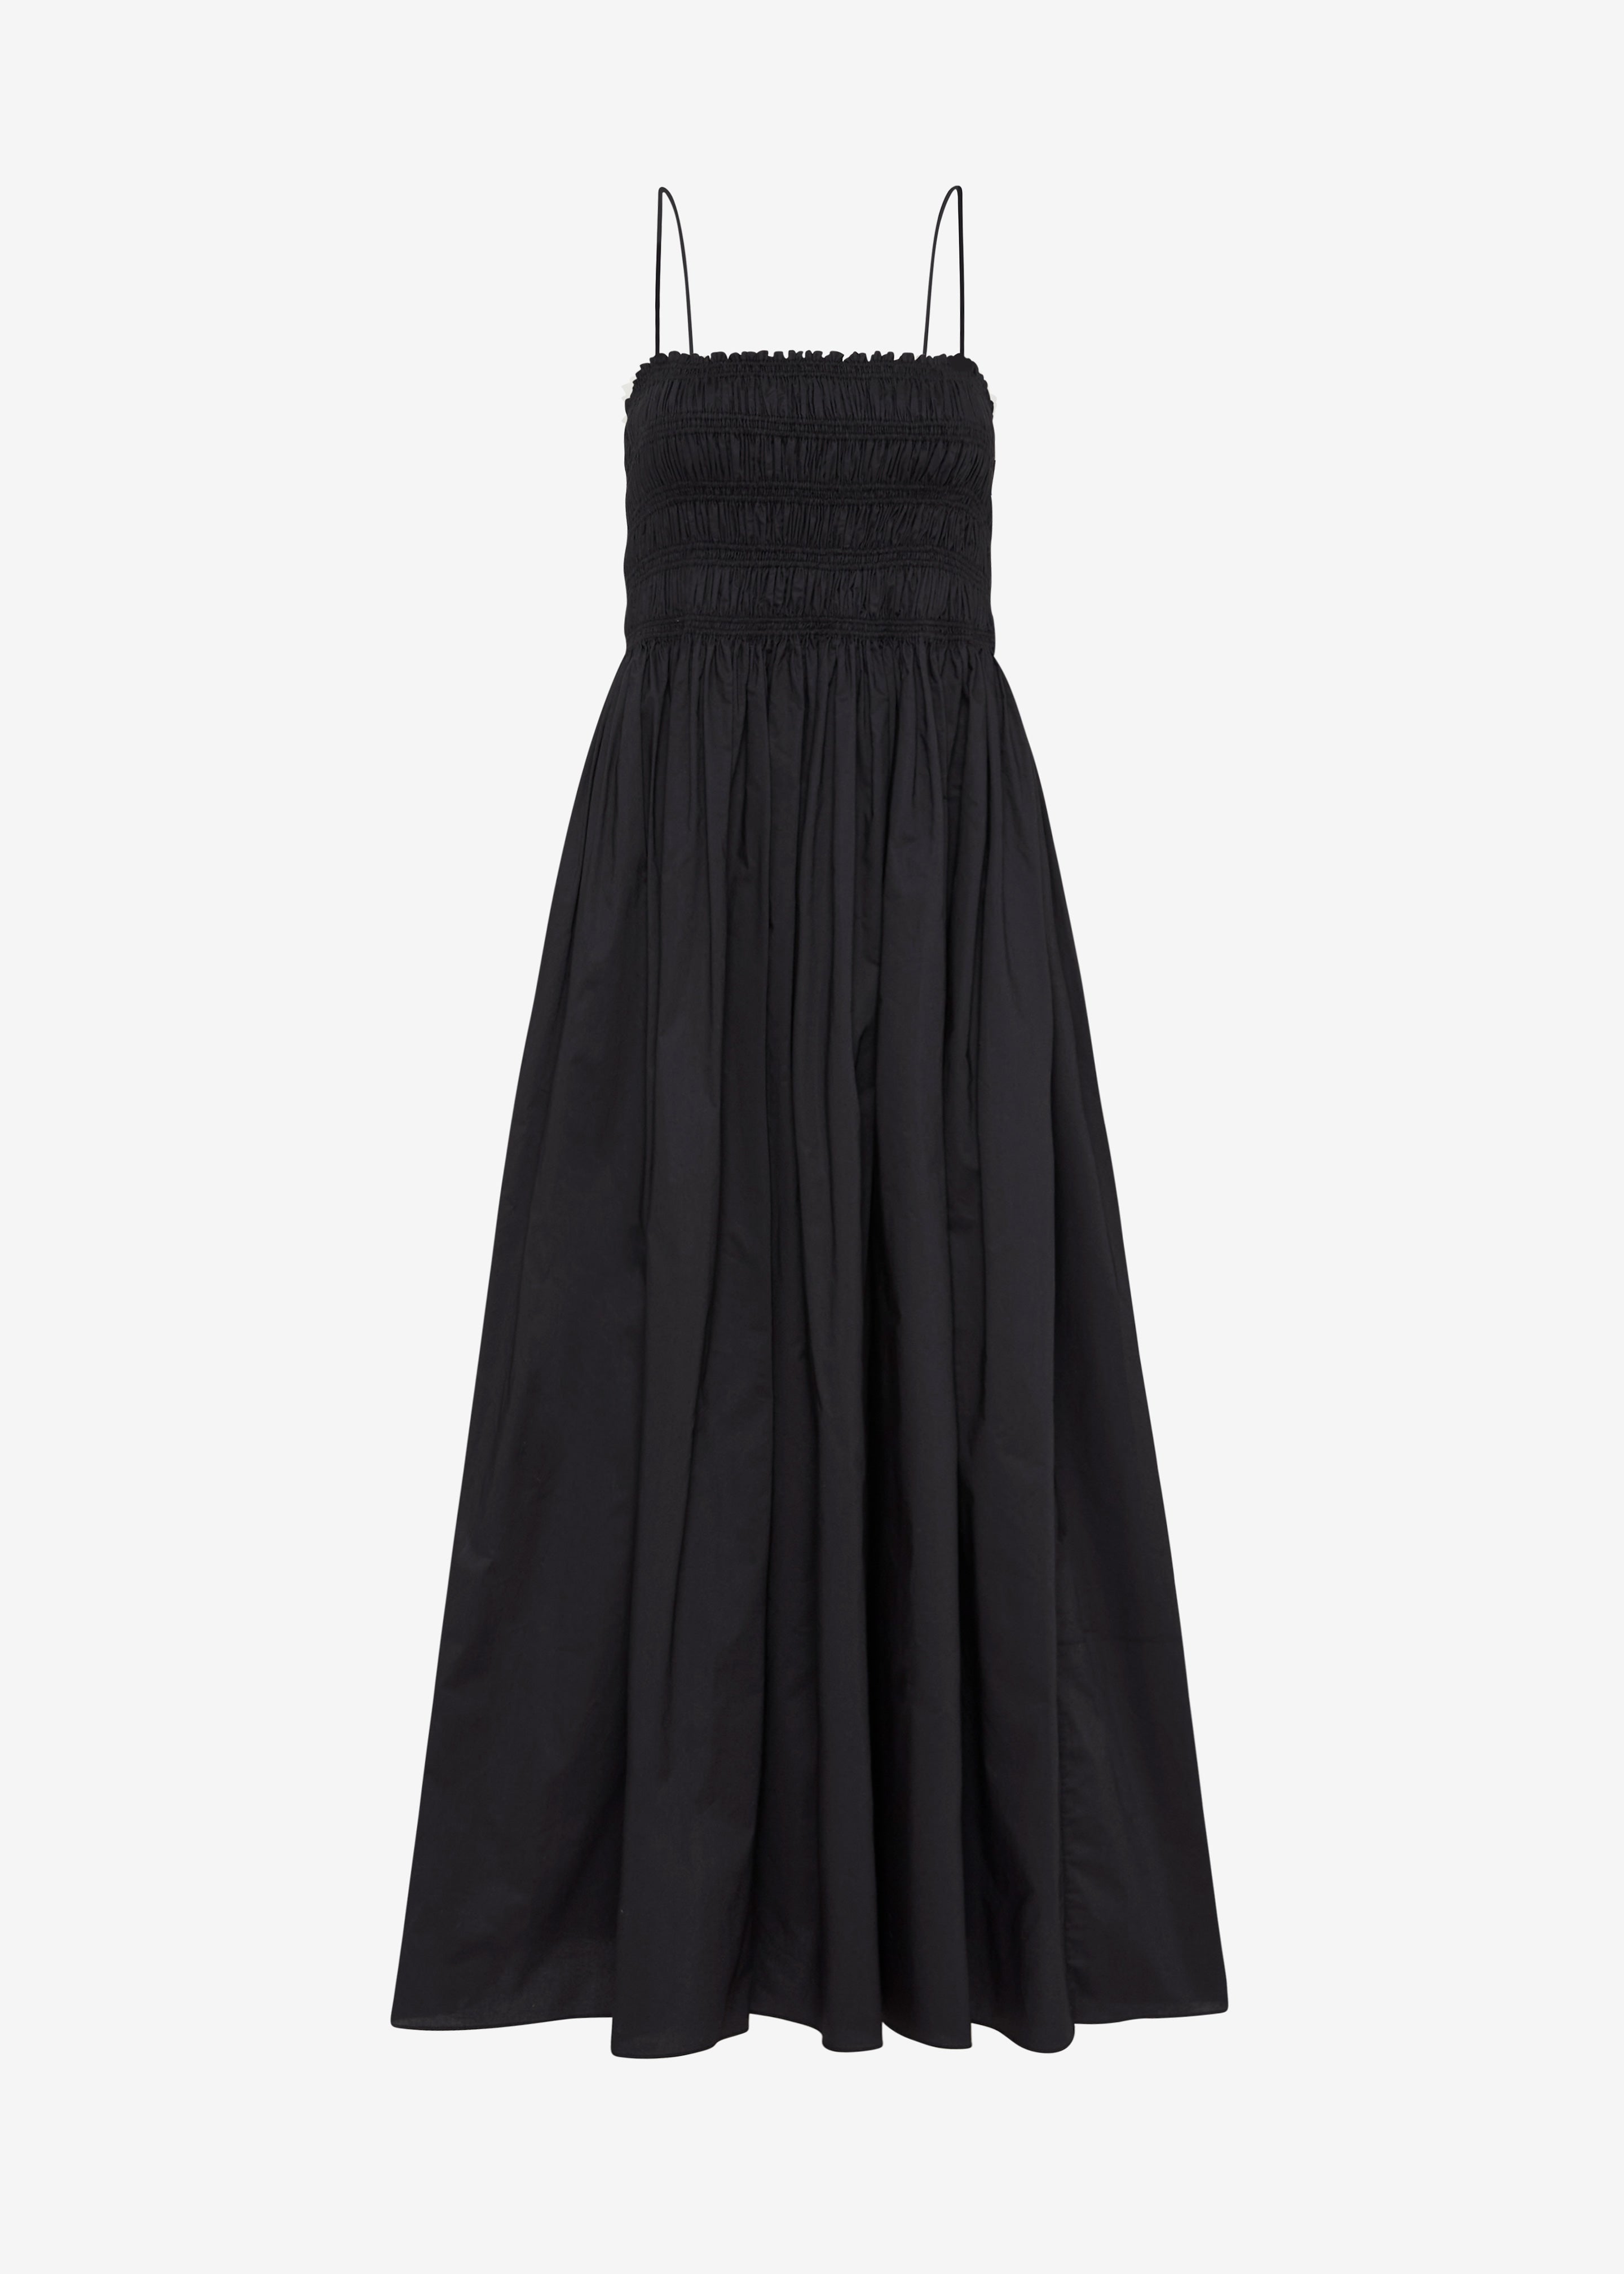 Matteau Shirred Bodice Dress - Black - 5